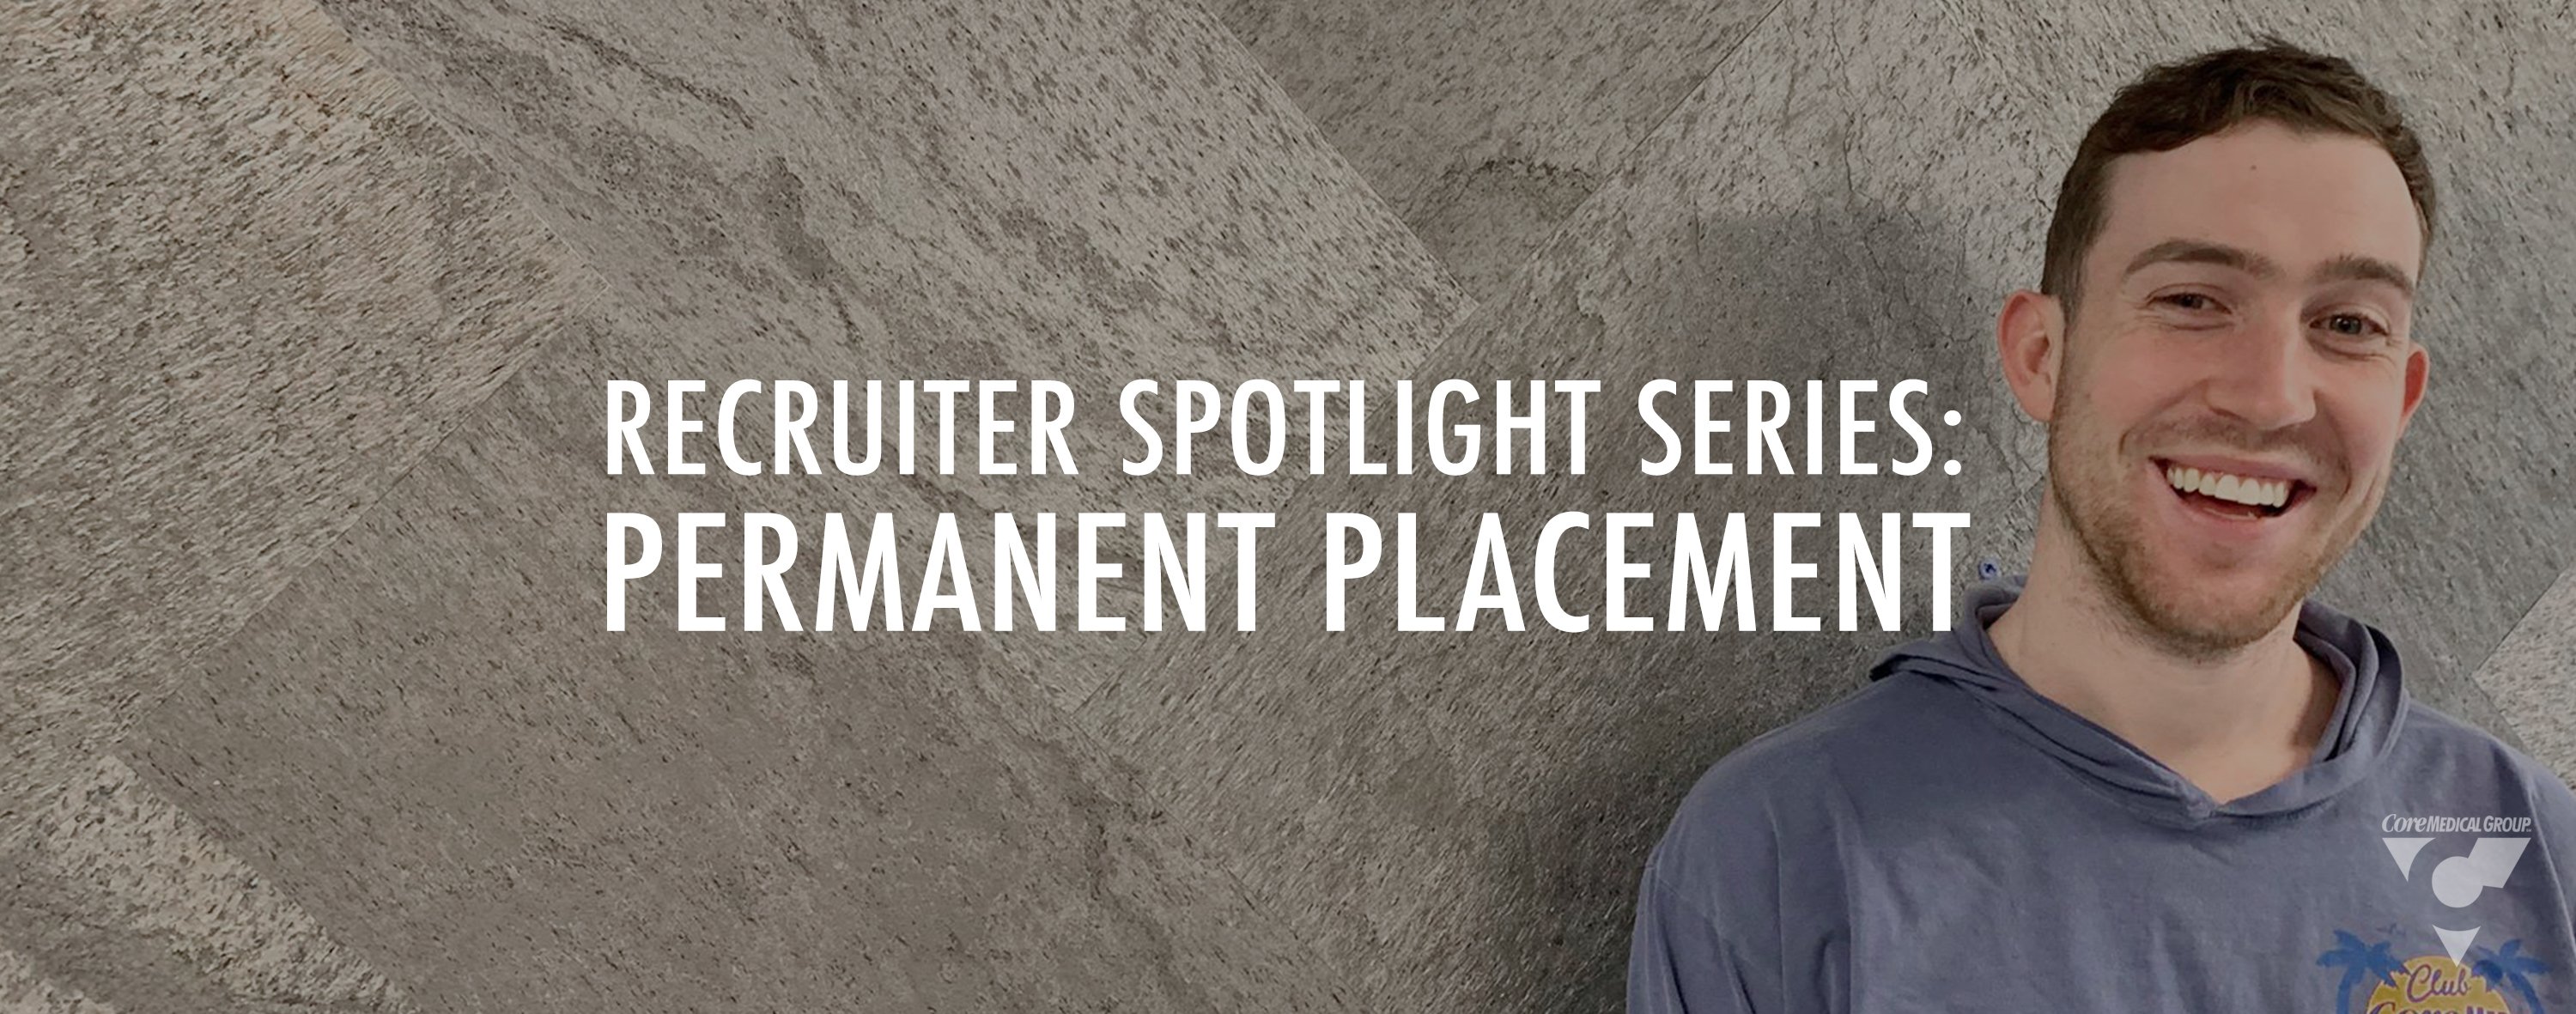 Recruiter Spotlight Series: Permanent Placement